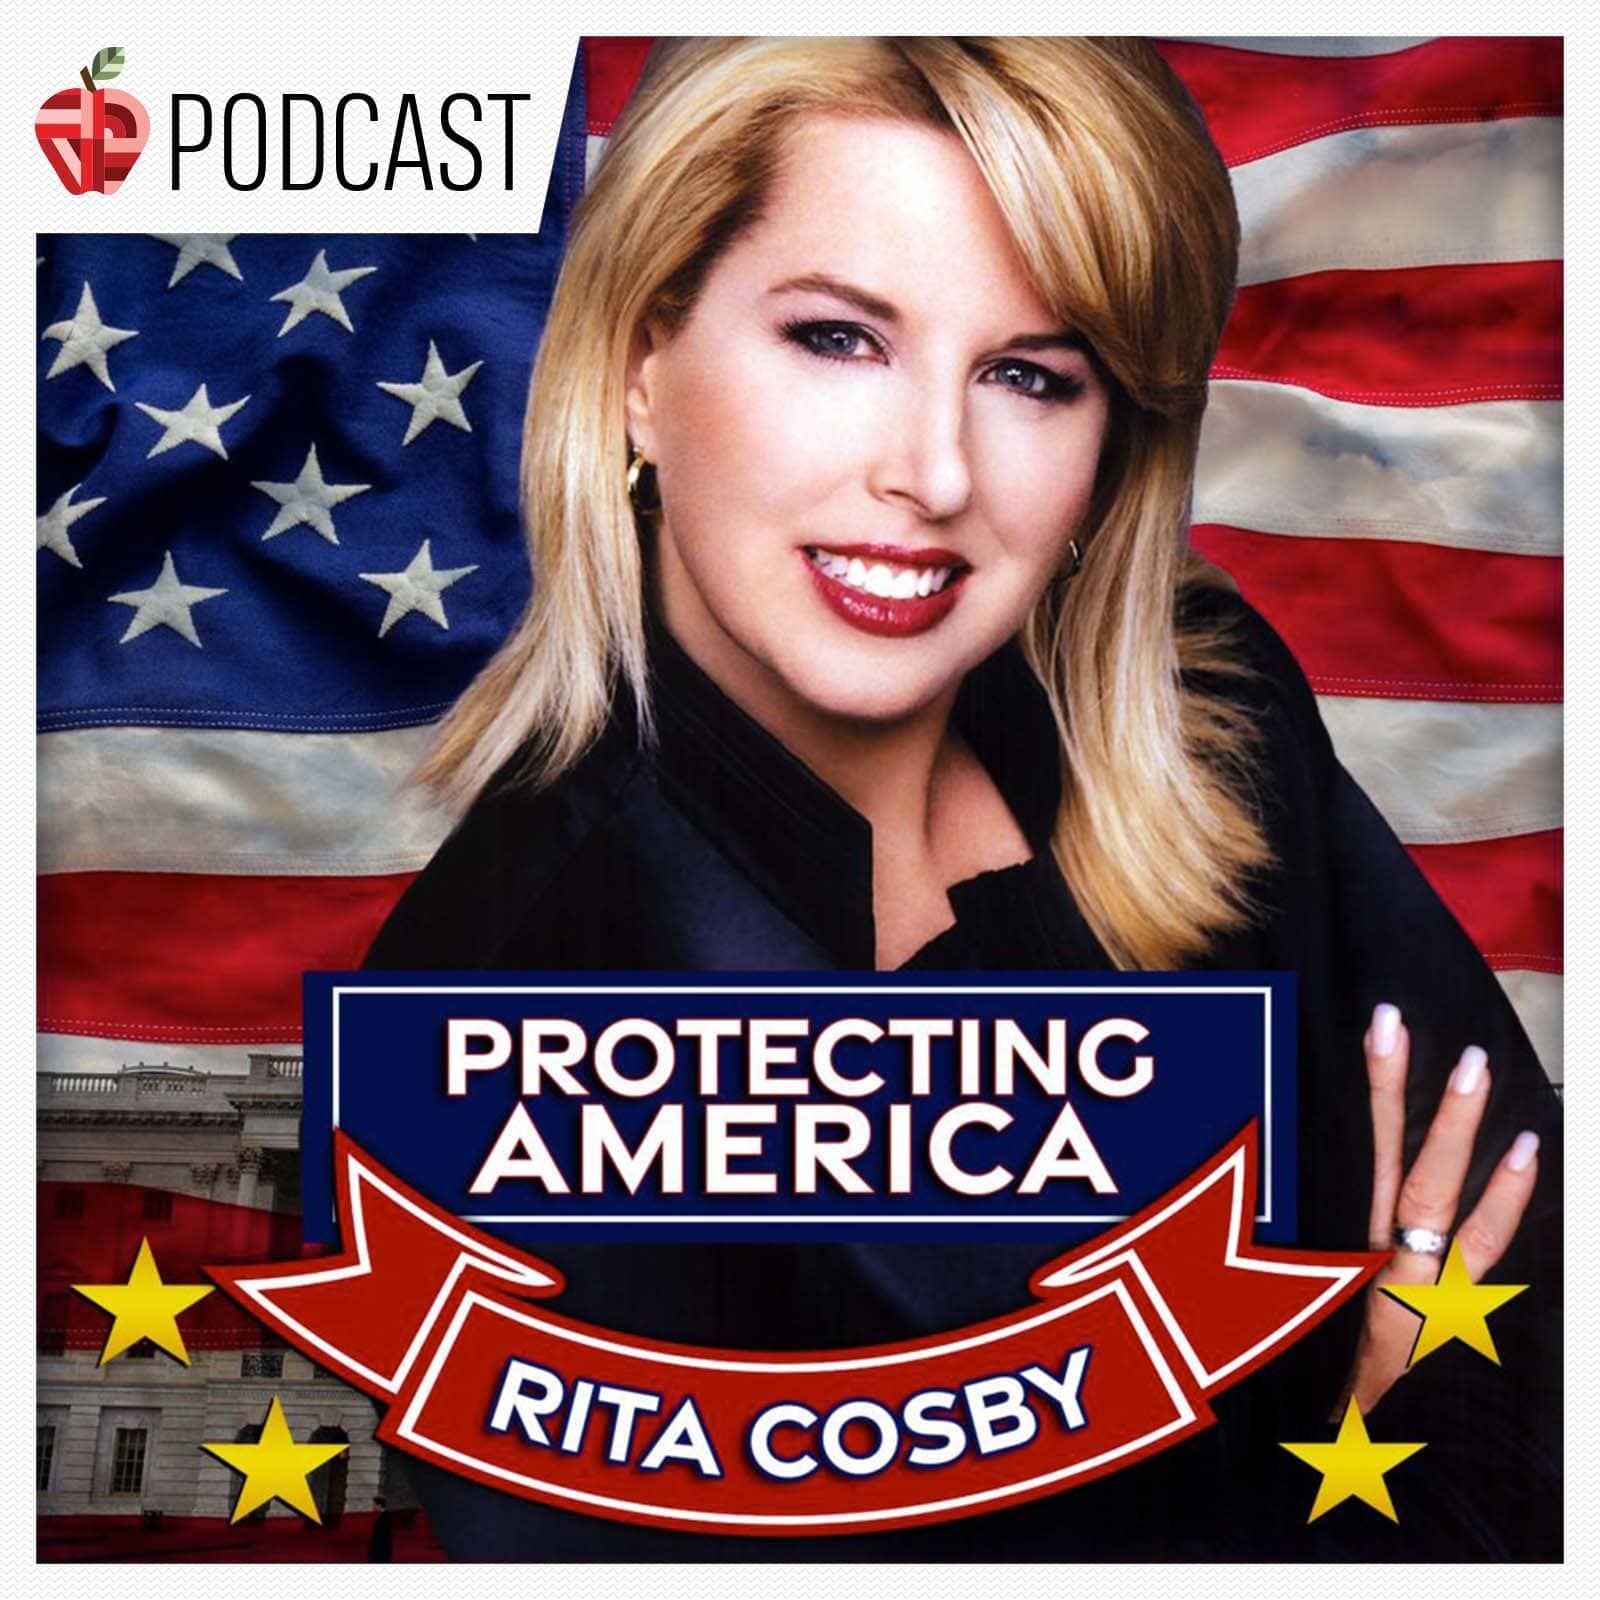 rita-cosby-protecting-america-correct-podcast-new-logo-25